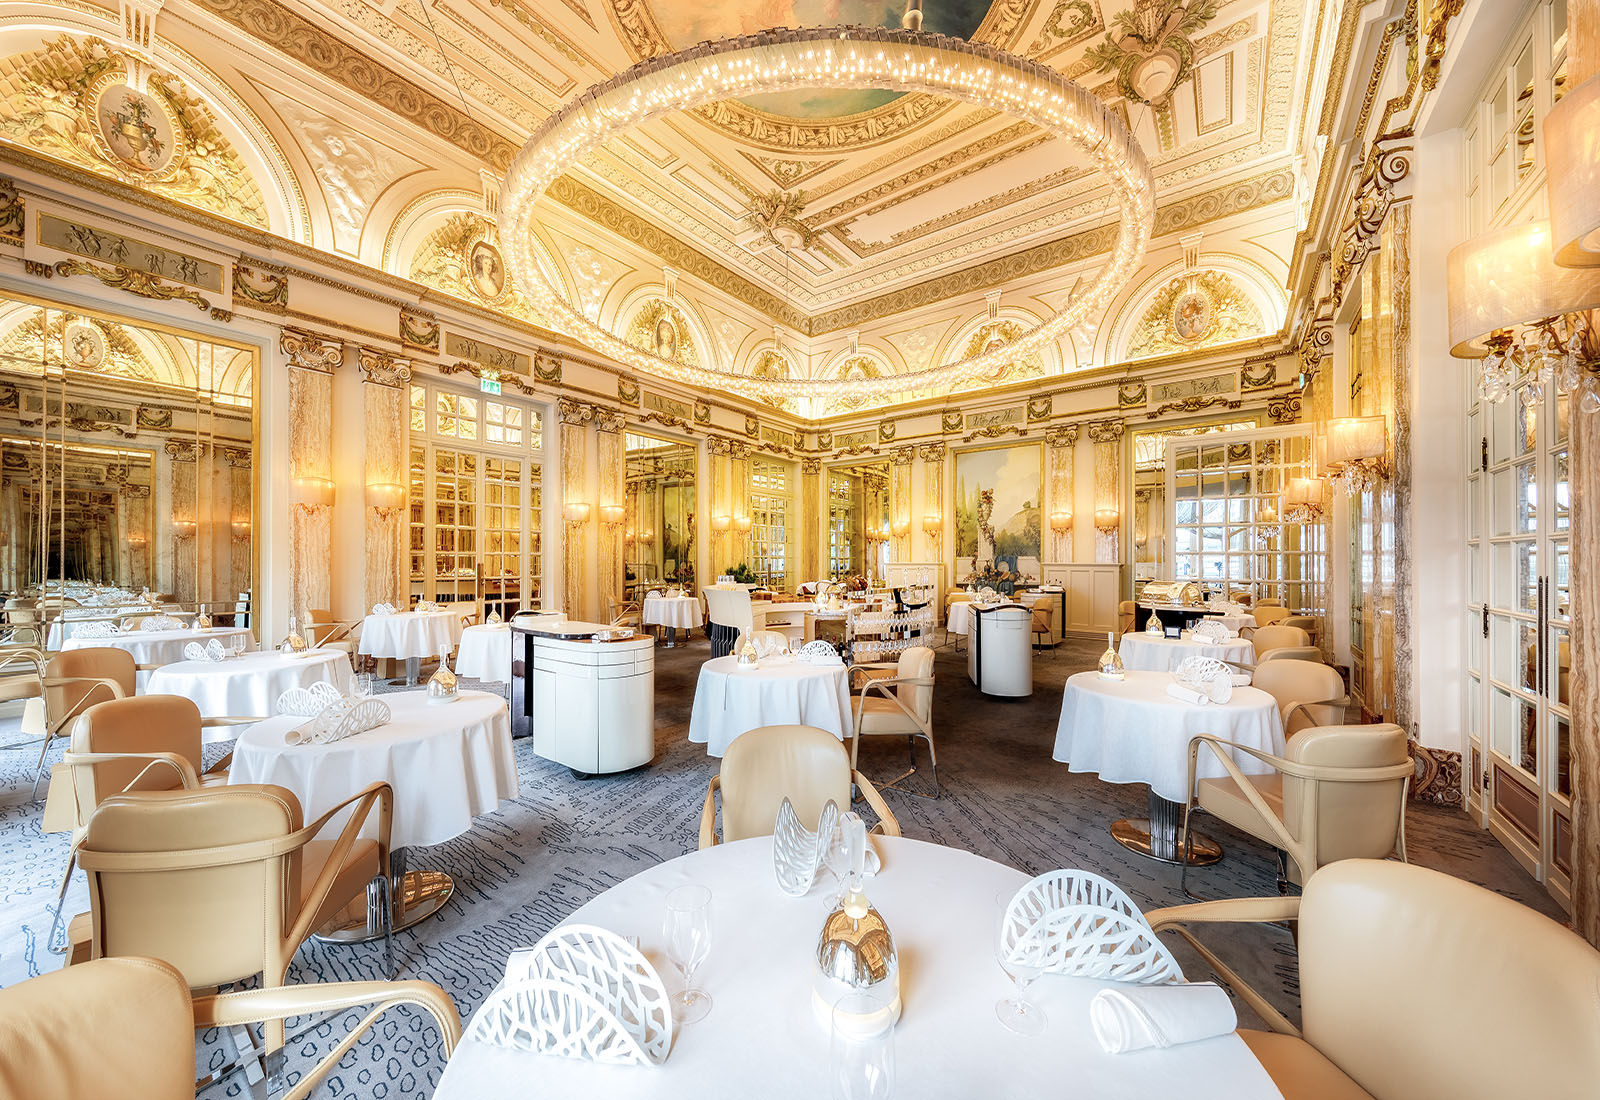 Interiors Of Le Louis XV, michelin three star restaurants